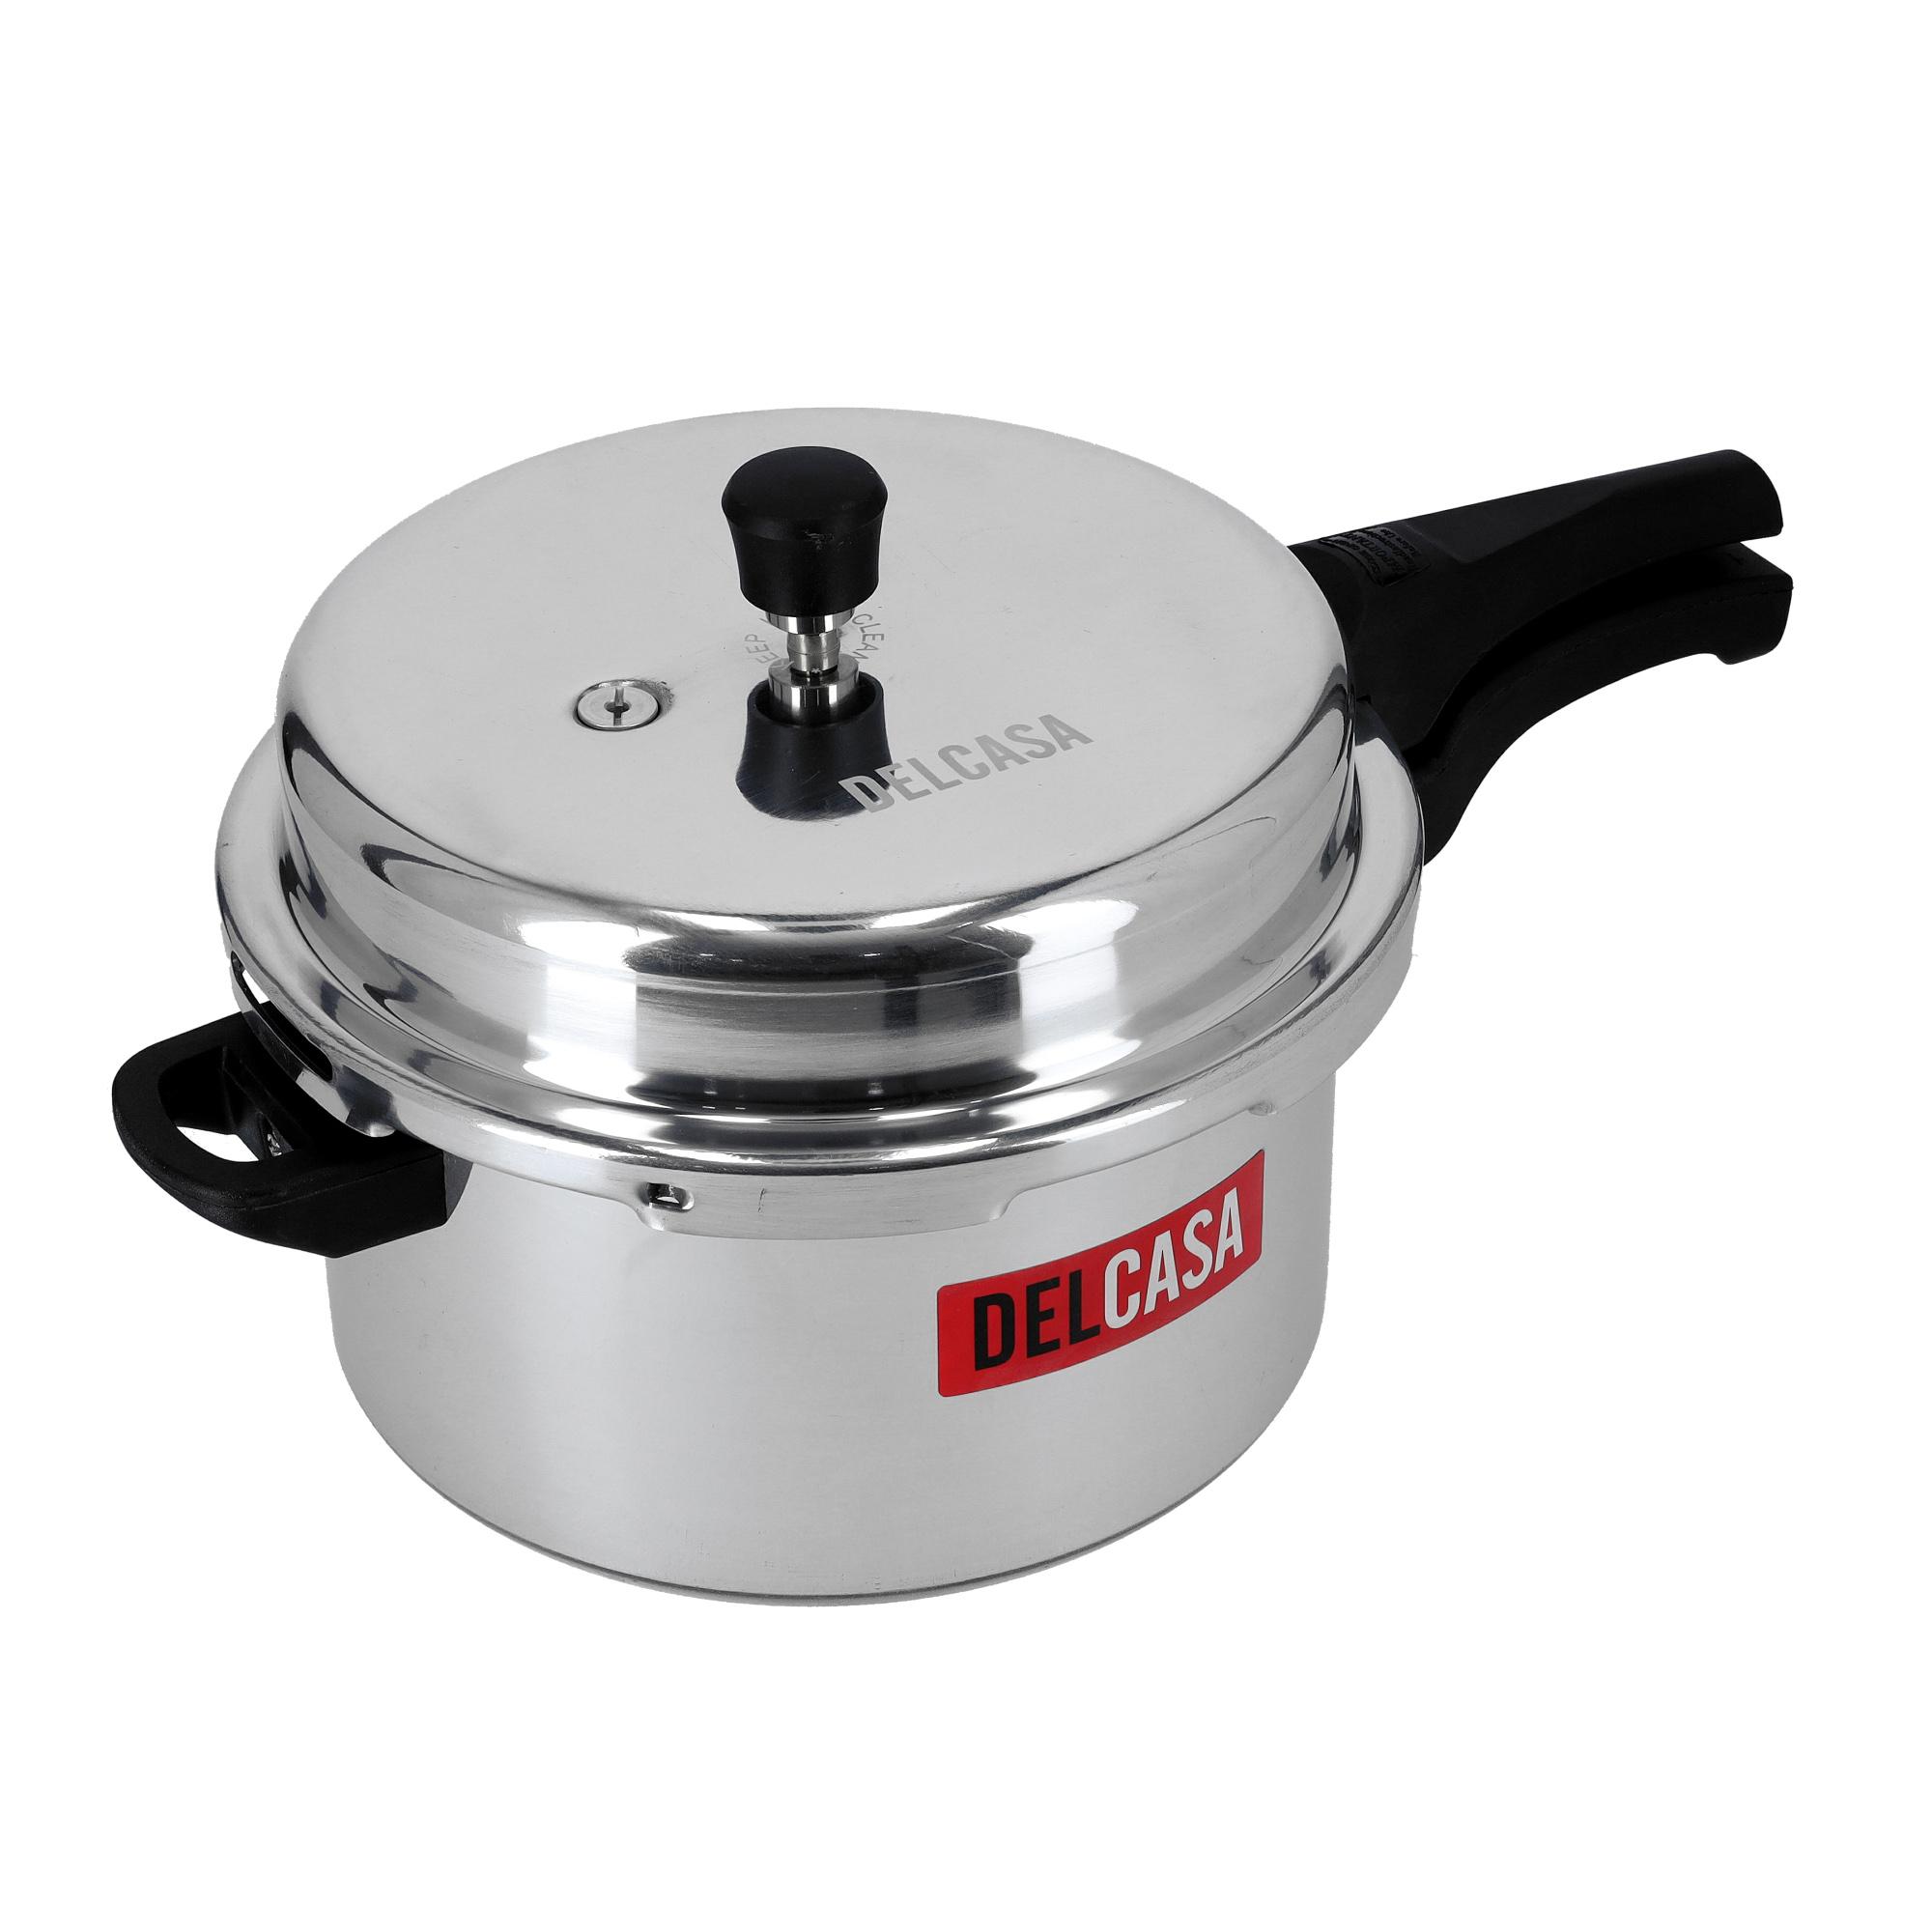 Delcasa 10L Aluminium Pressure Cooker - Lightweight & Durable Home Kitchen Pressure Cooker With Lid